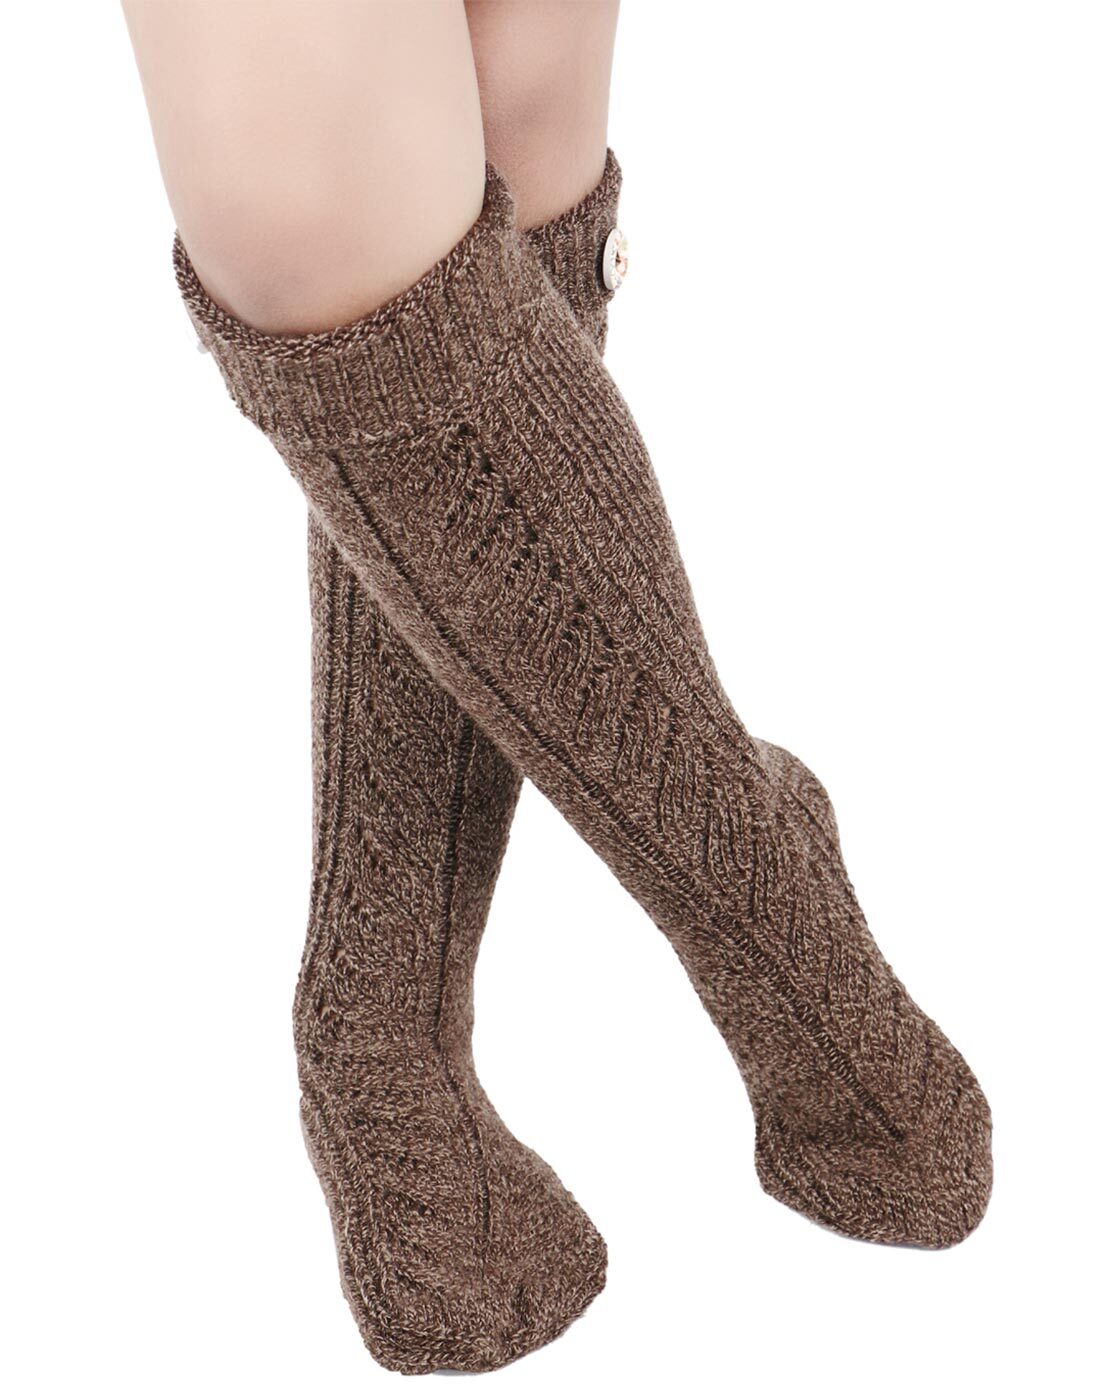 Buy Brown Socks  Stockings for Girls by Bharatasya Online  Ajiocom